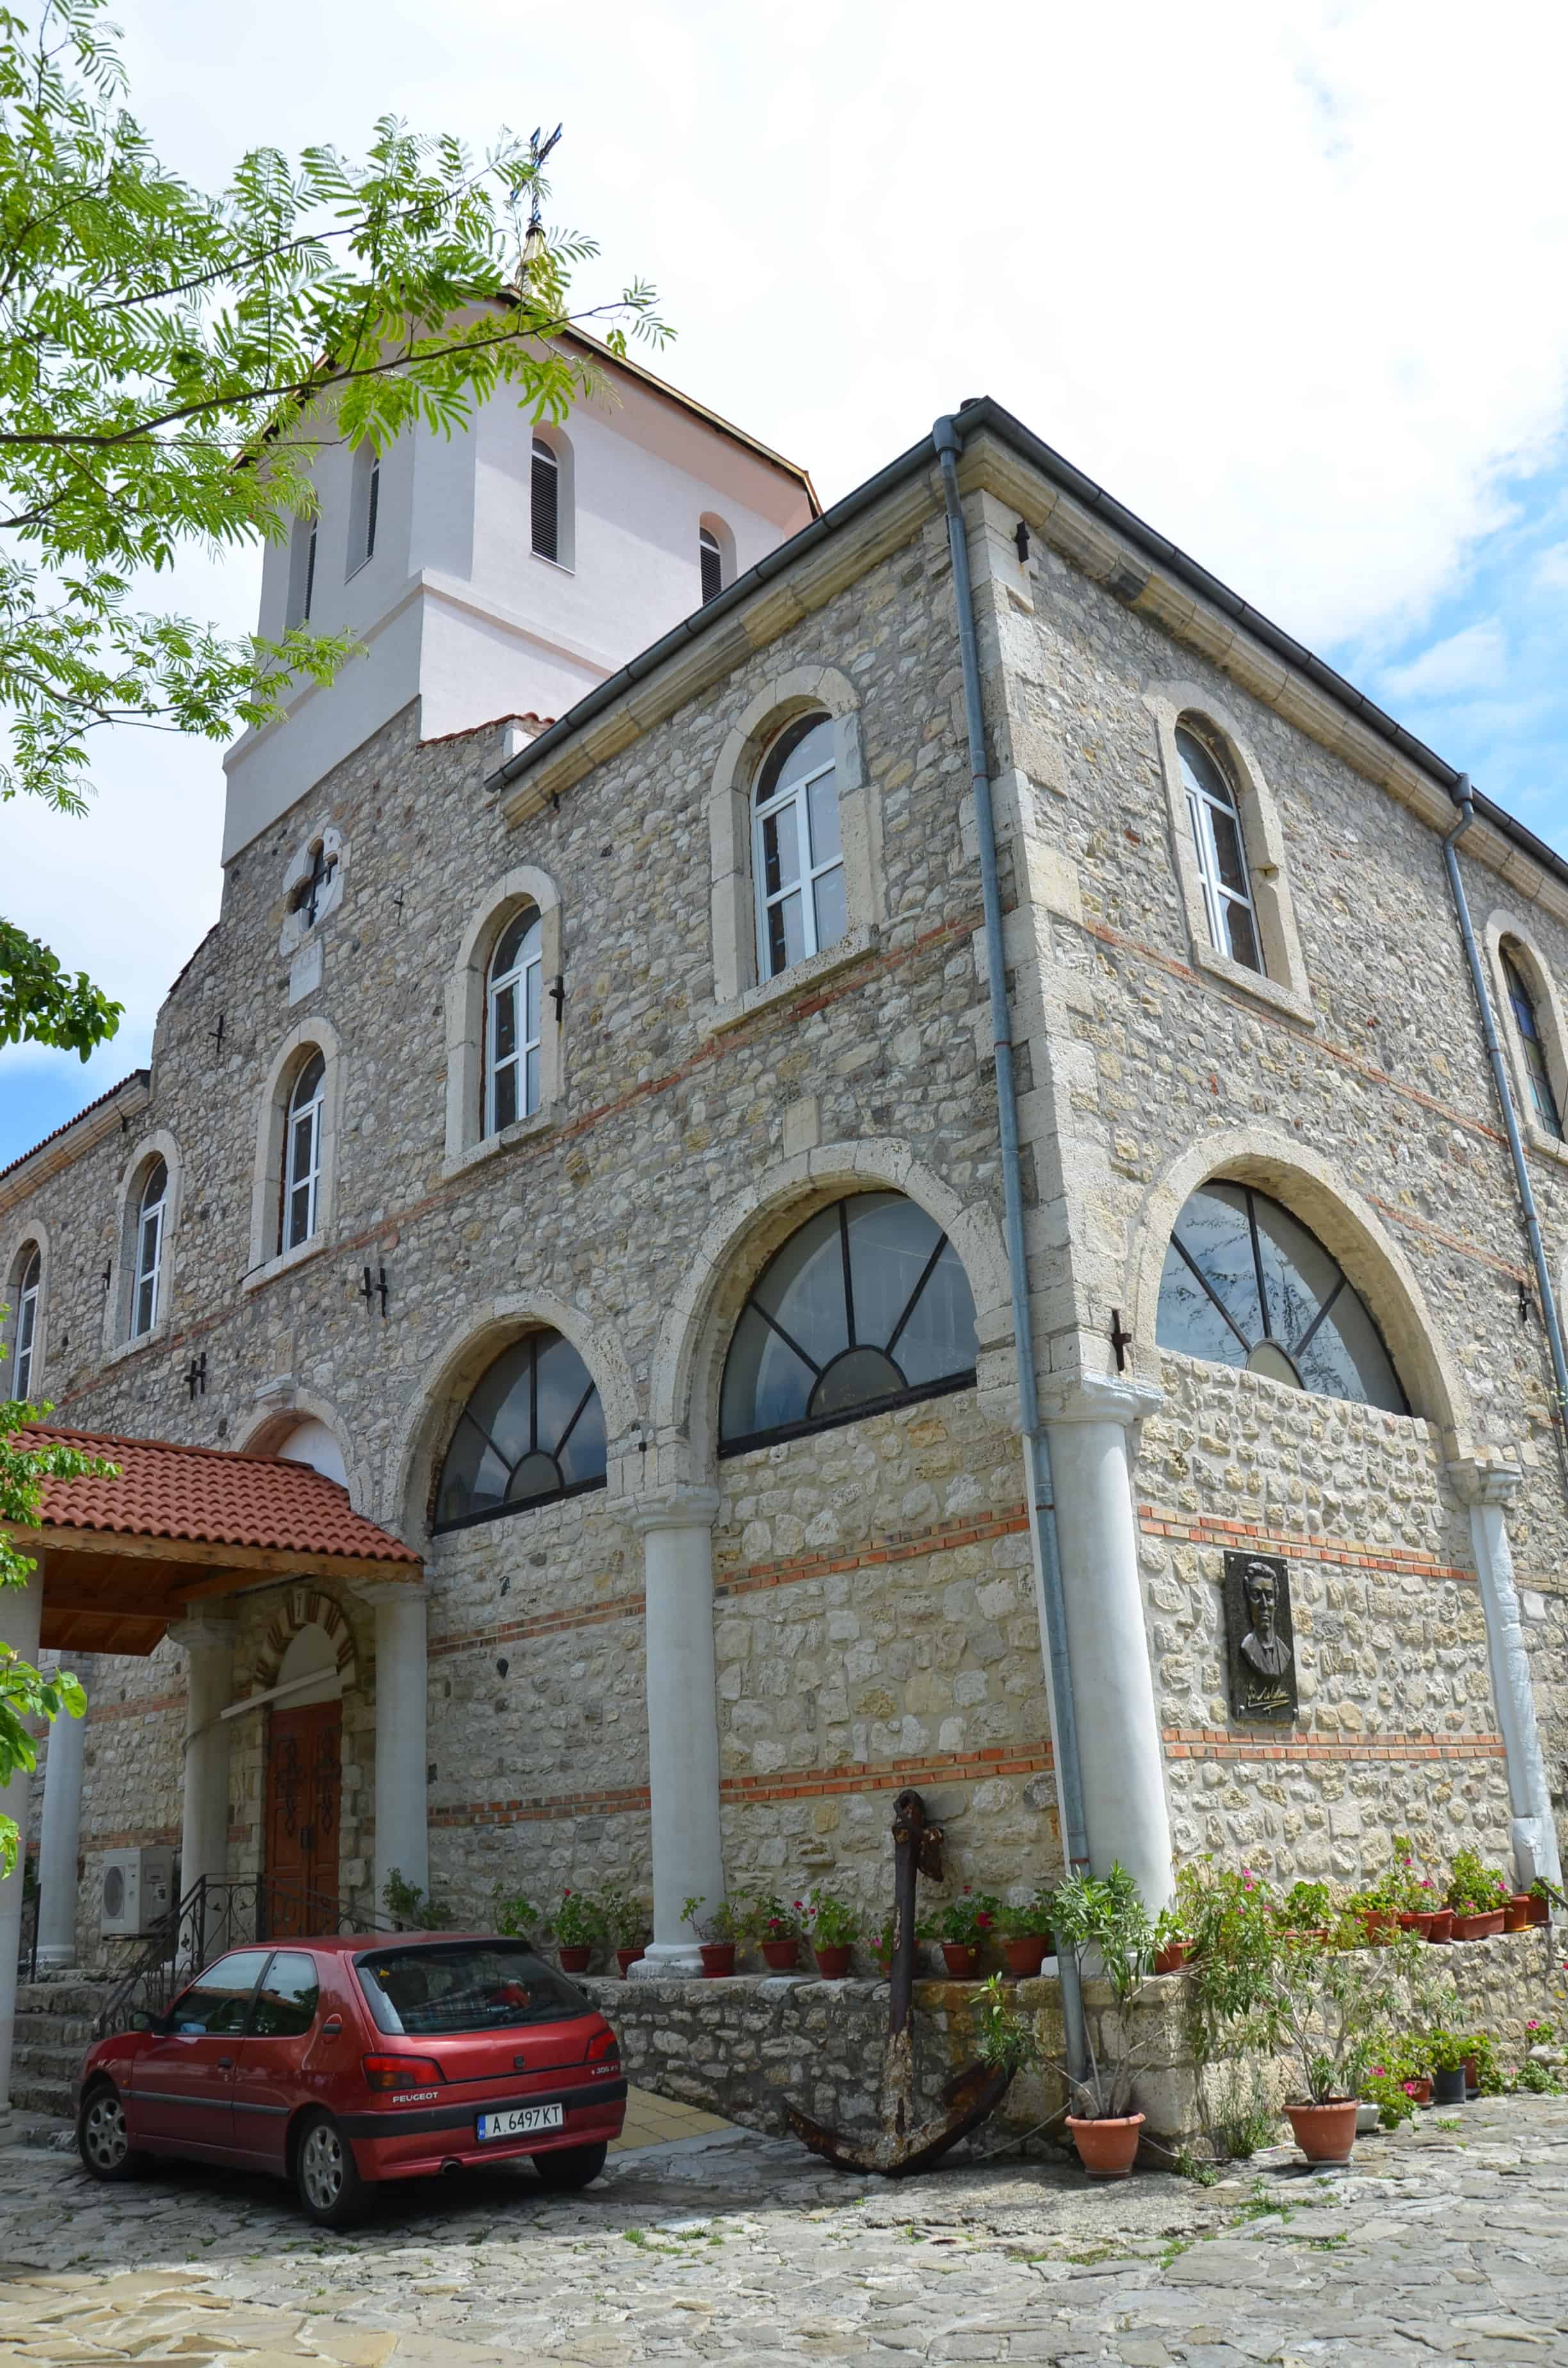 Dormition of the Theotokos Church in Nessebar, Bulgaria